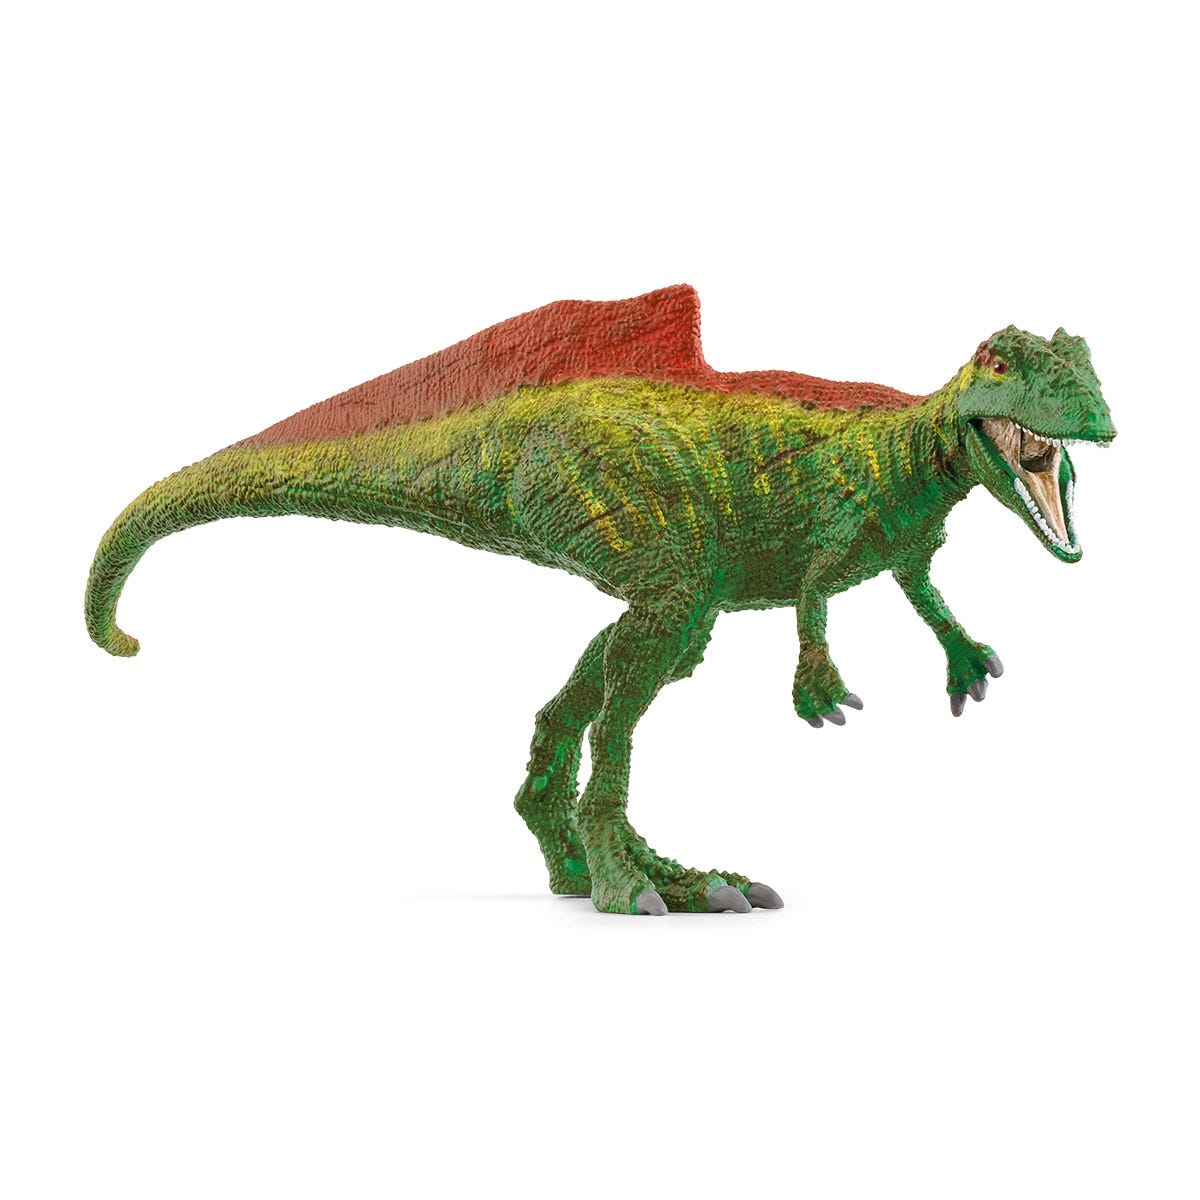 DINOSAURS – the world of dinosaurs